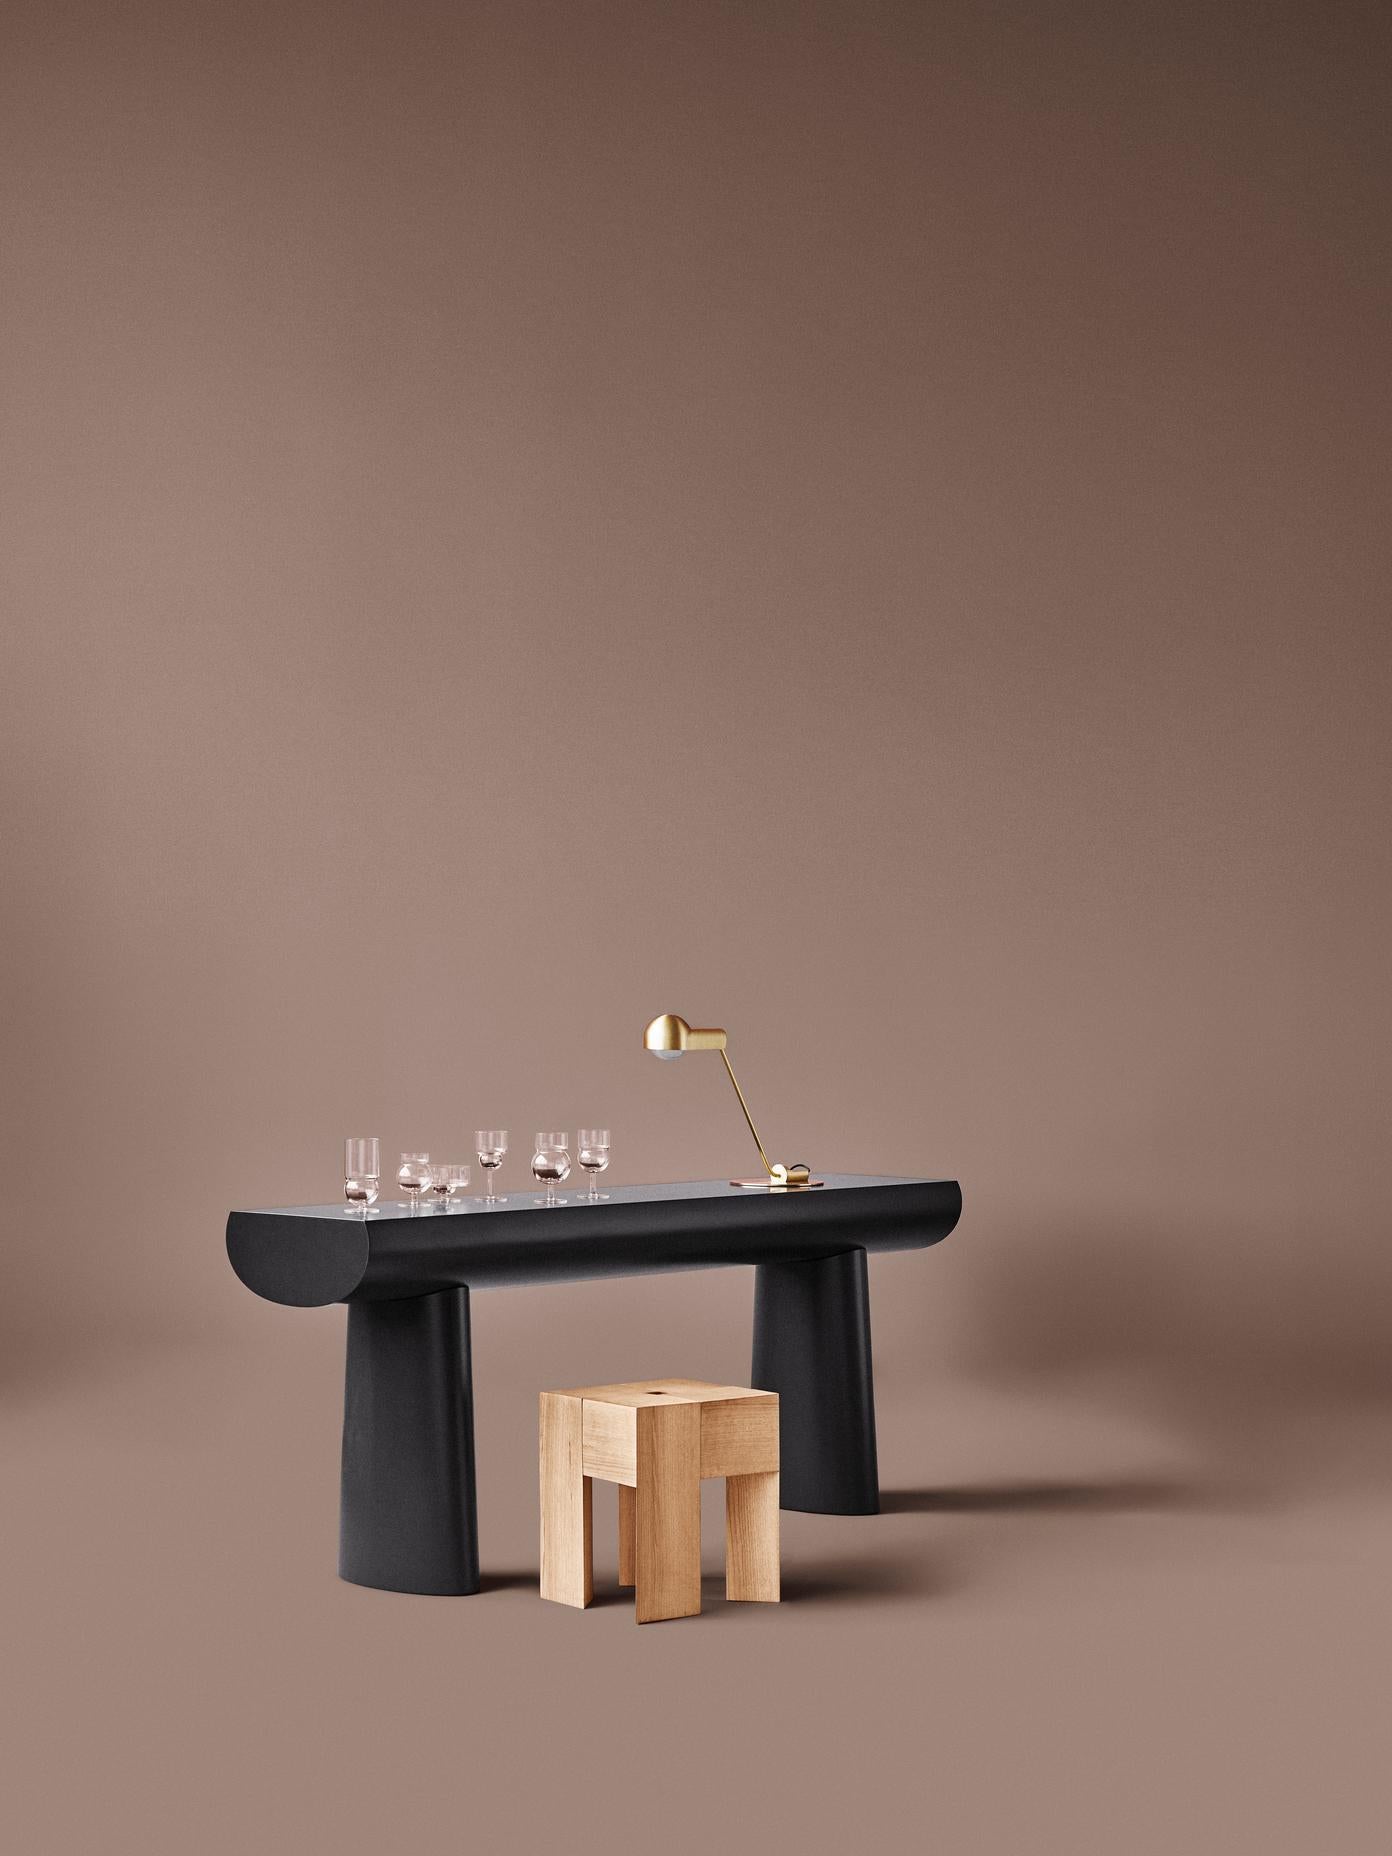 Contemporary Aldo Bakker 'Triangle' Wood Stool or Side Table by Karakter For Sale